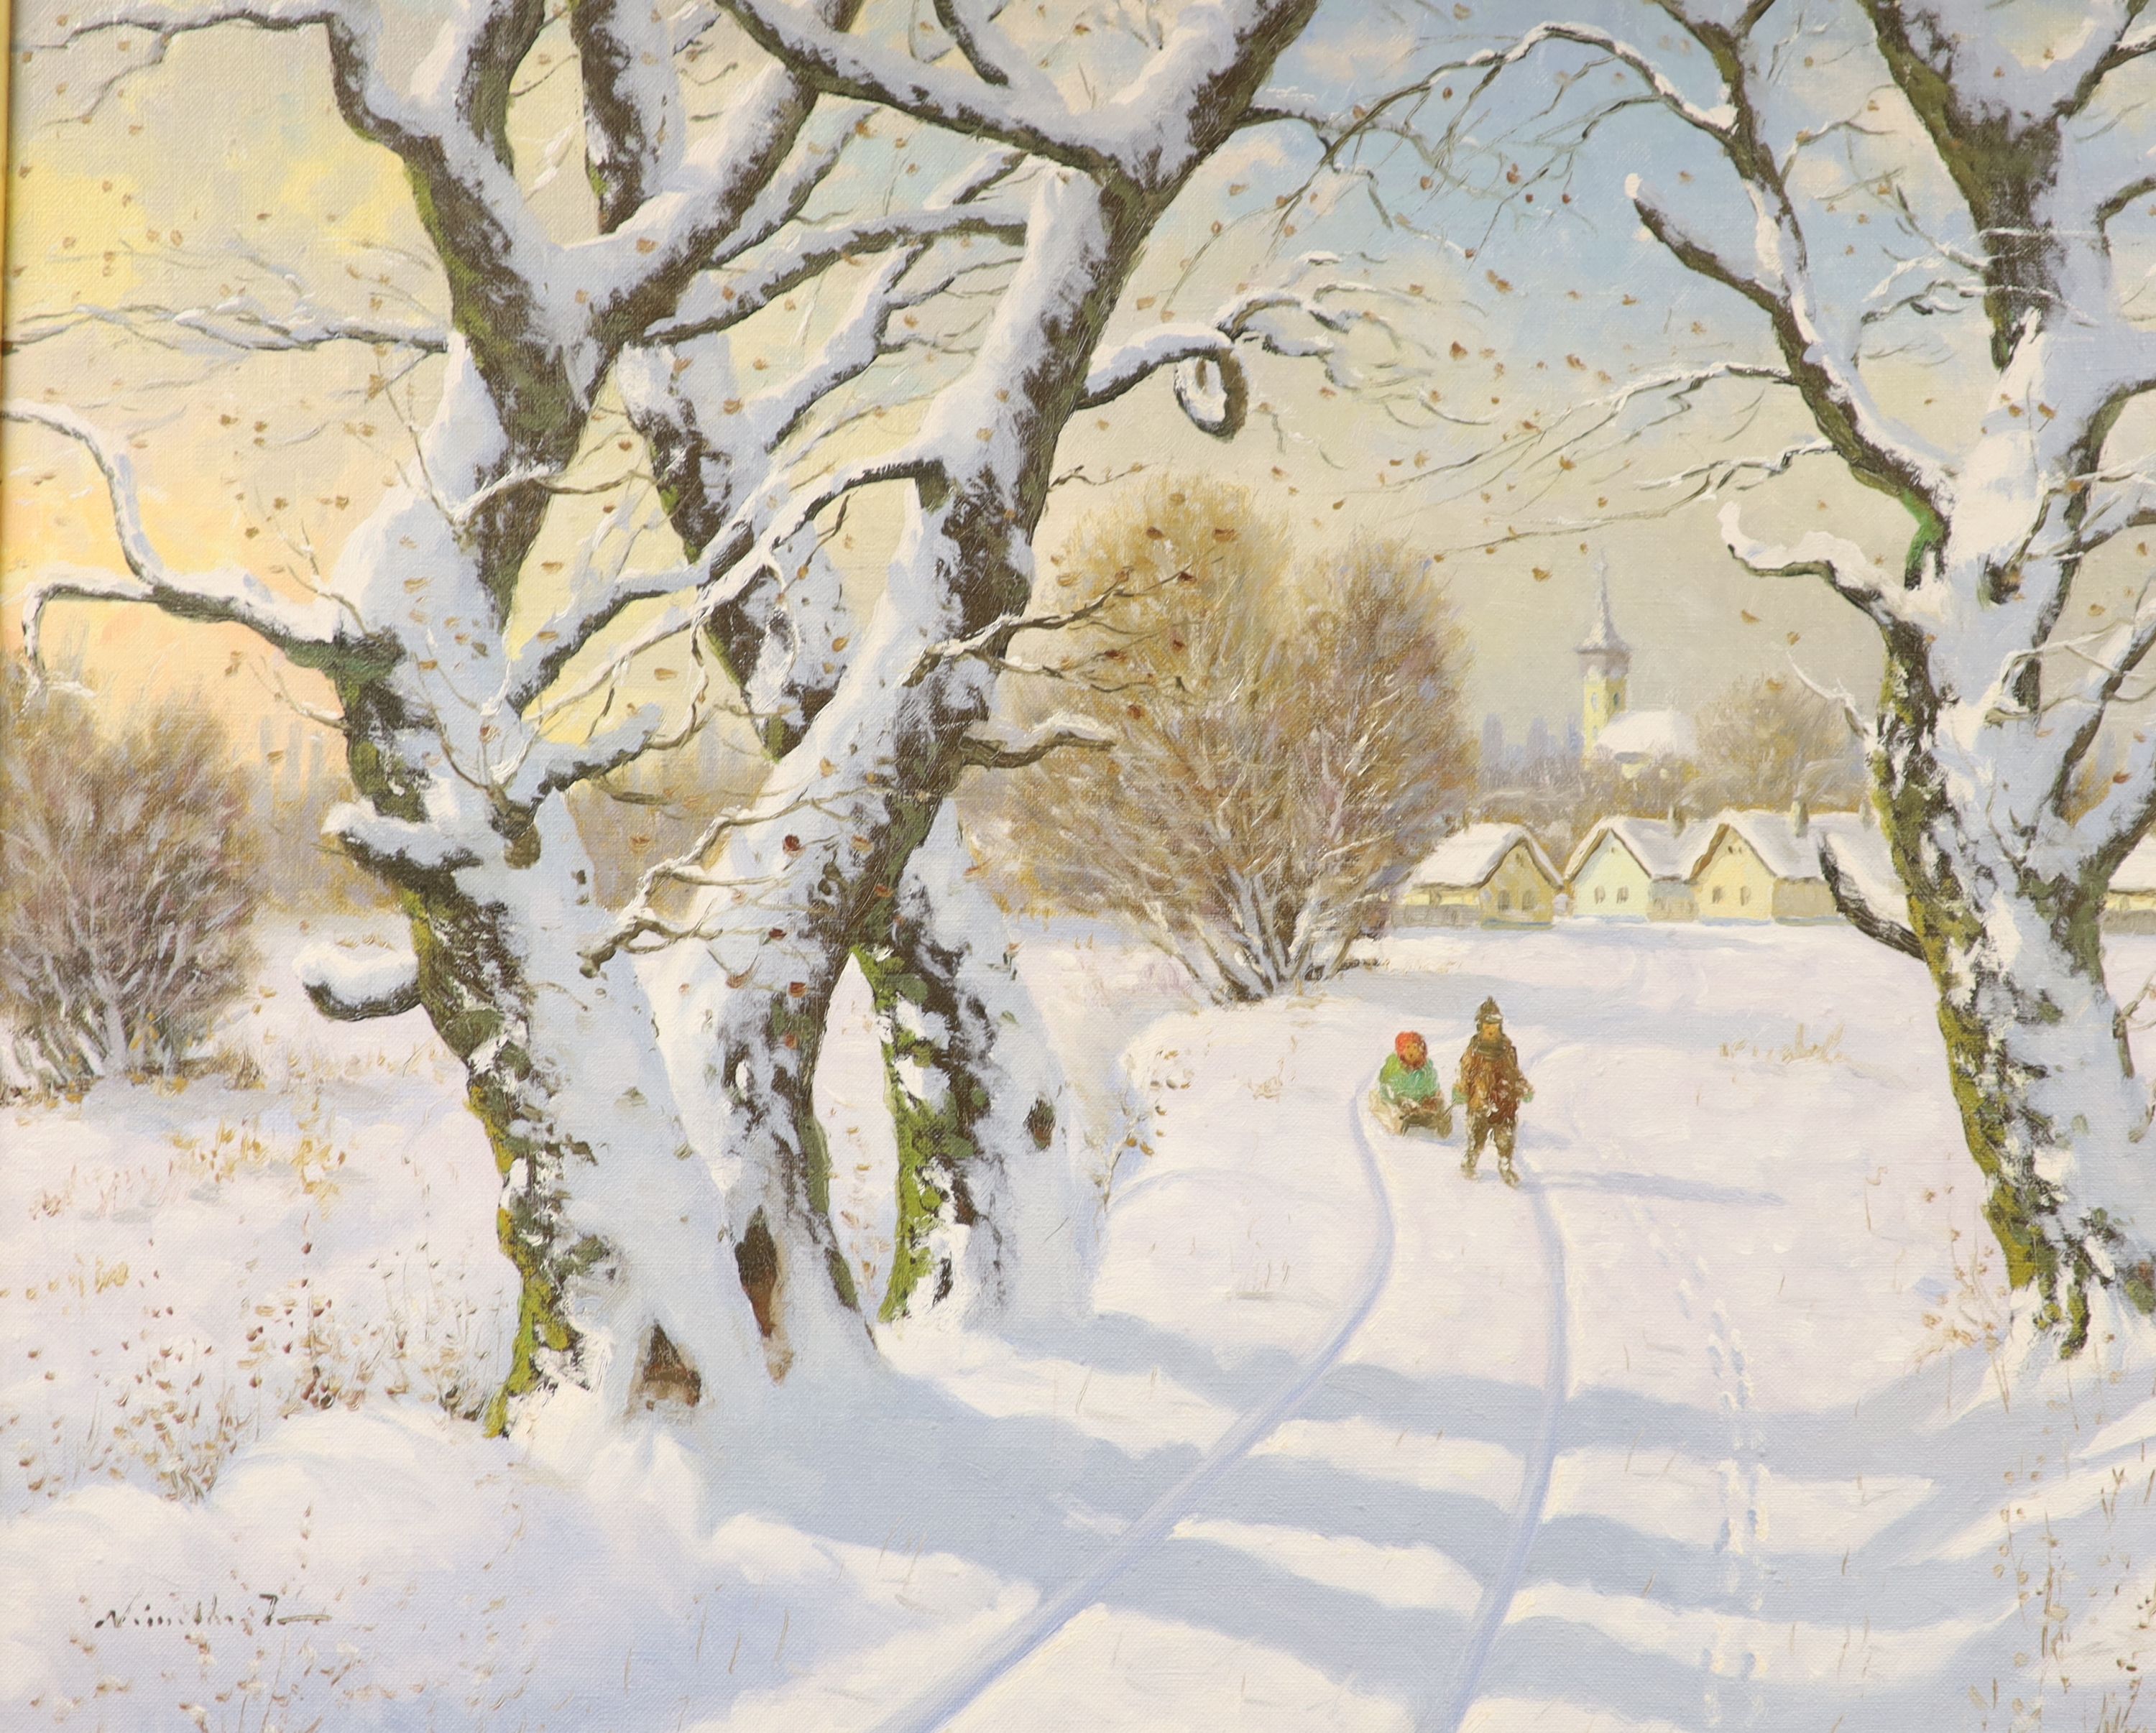 Z* Nemeth (20th century), oil on canvas, Winter landscape, 50 x 60cm